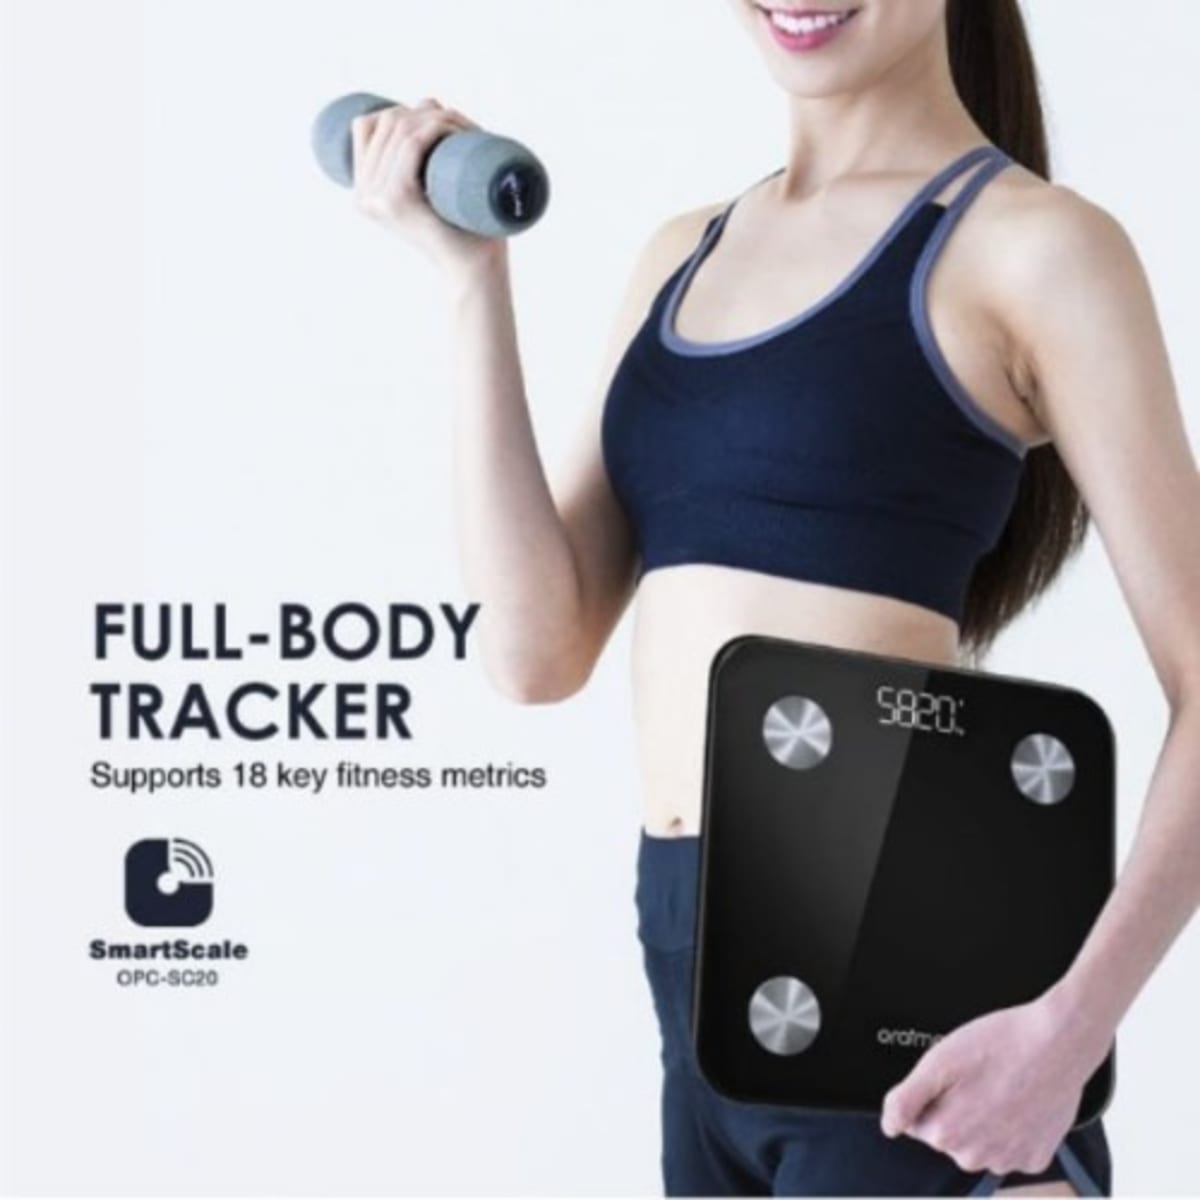 Oraimo Smartscale 18key Fitness Fat Mertic Tracker Scale- Black